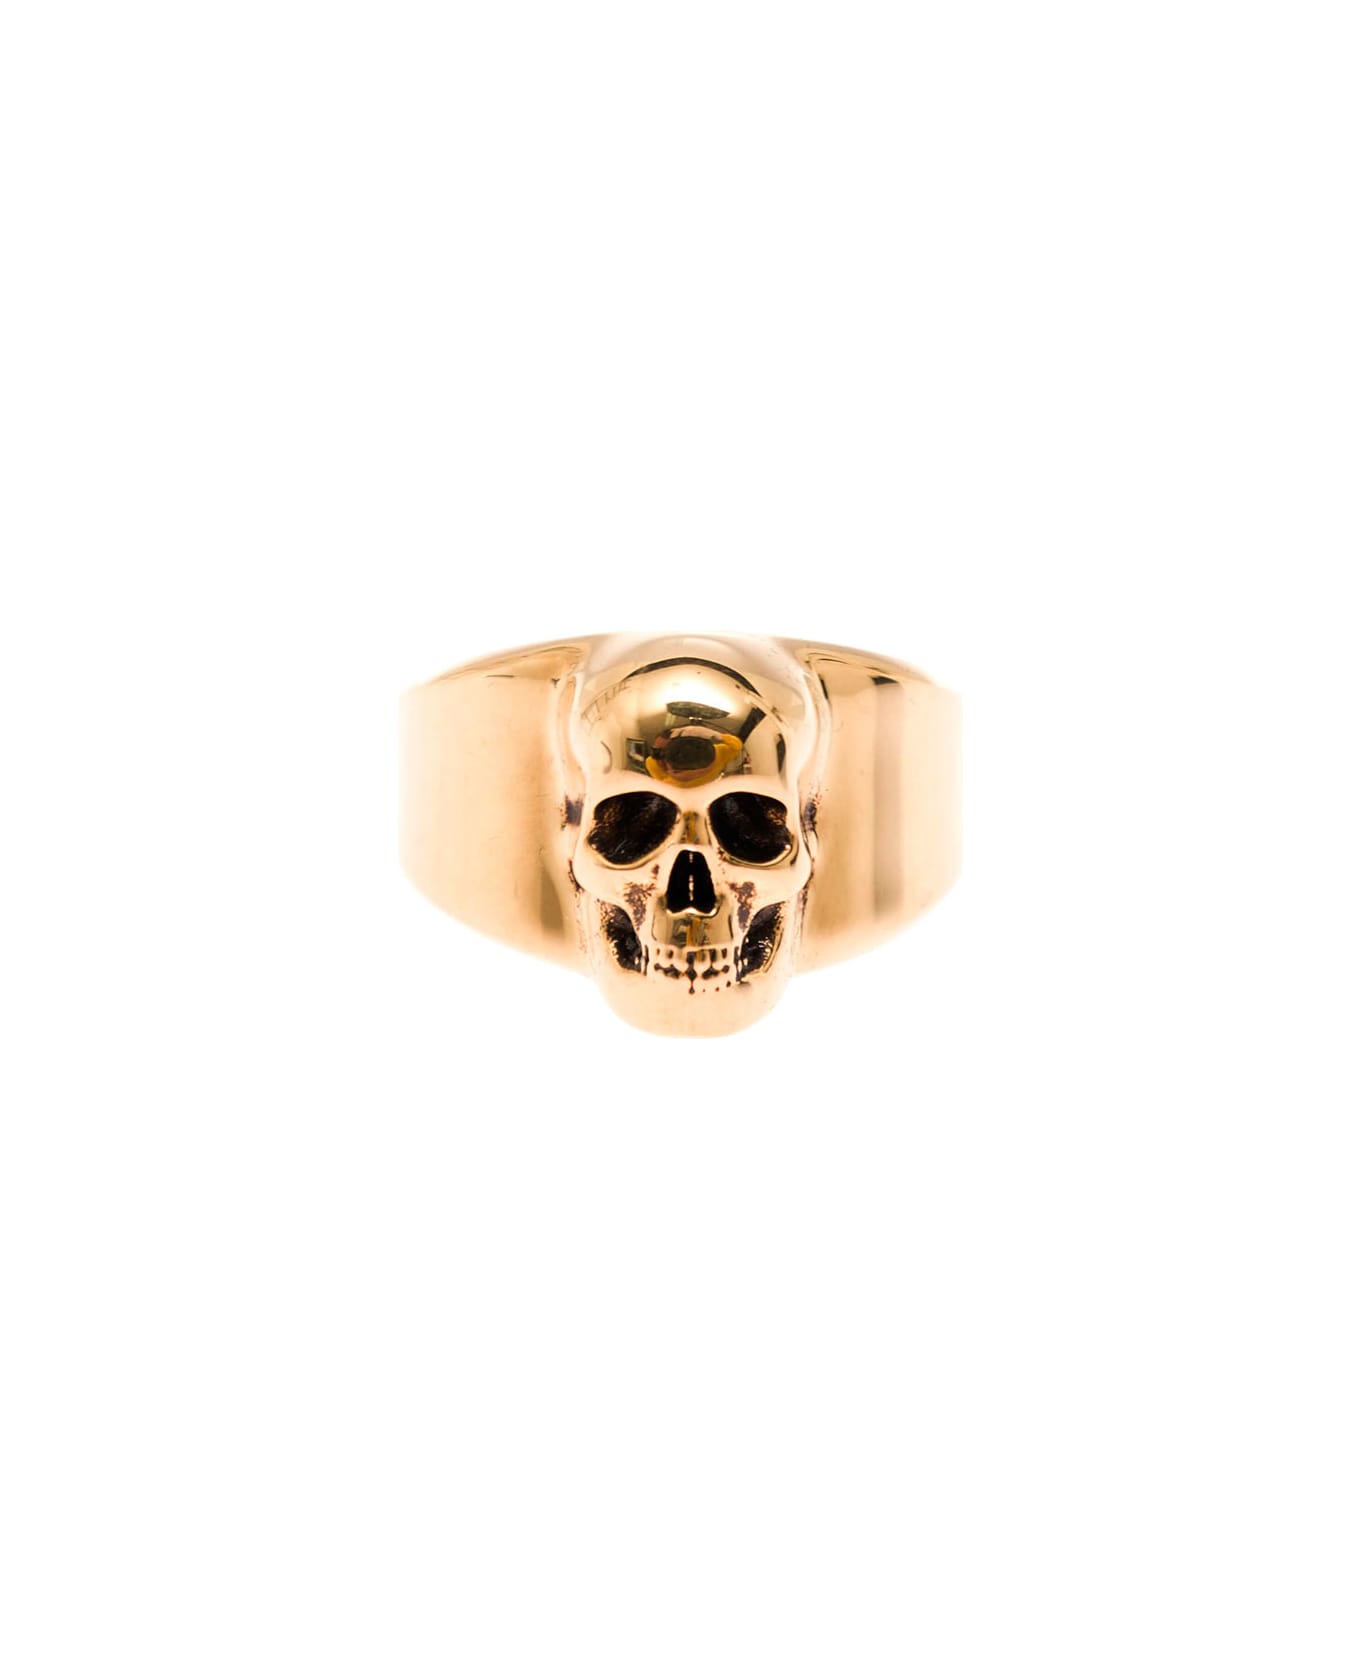 Alexander McQueen Man's Skull Gold Colored Brass Ring - Metallic リング